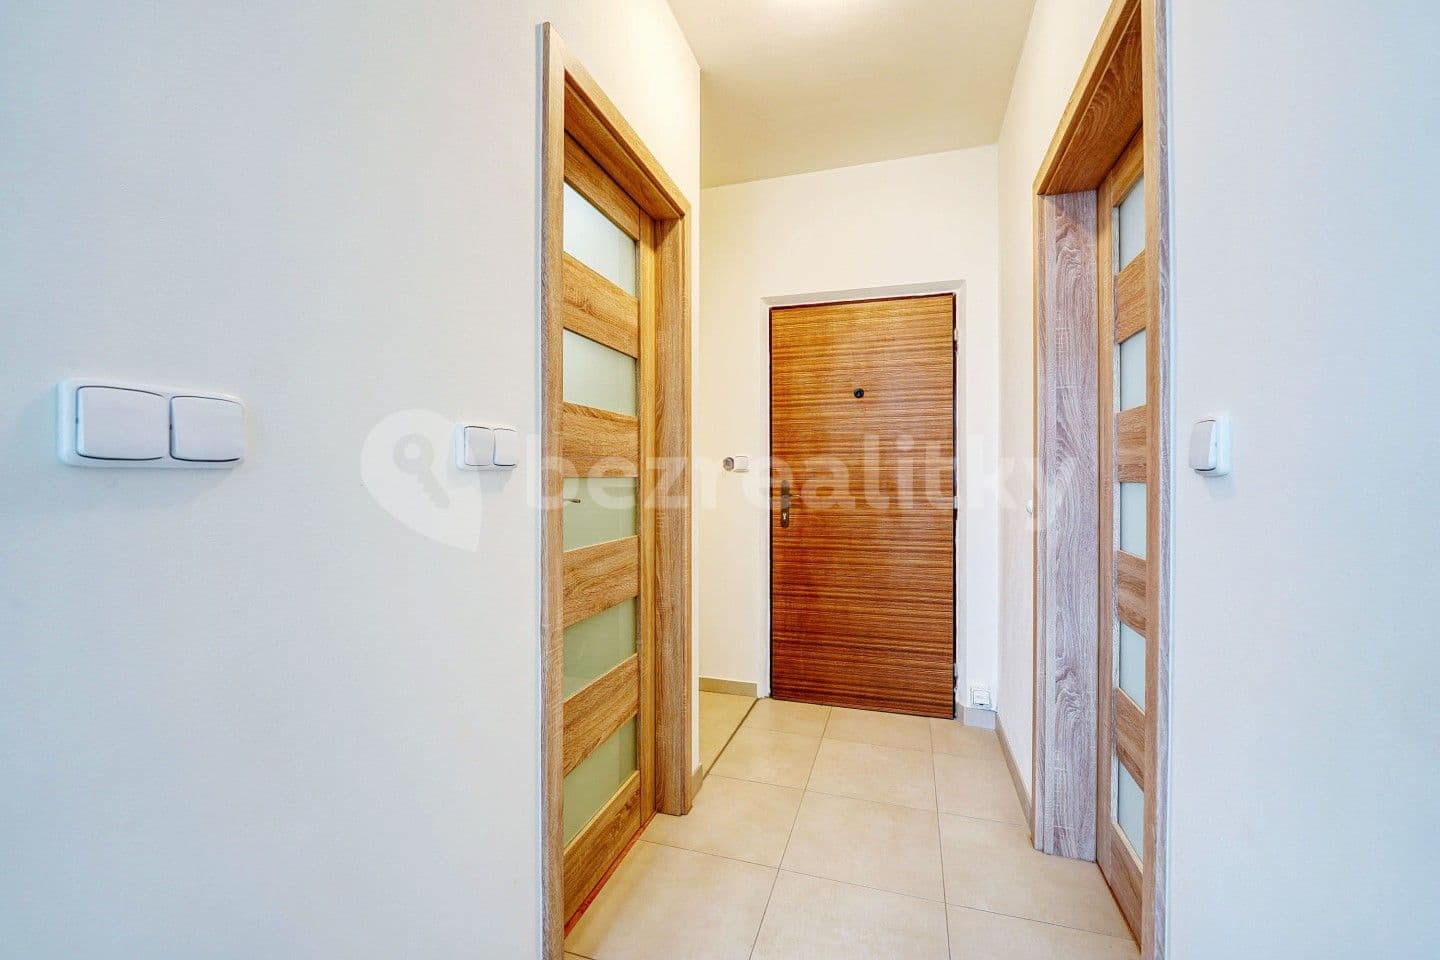 1 bedroom flat for sale, 44 m², Žihle, Plzeňský Region